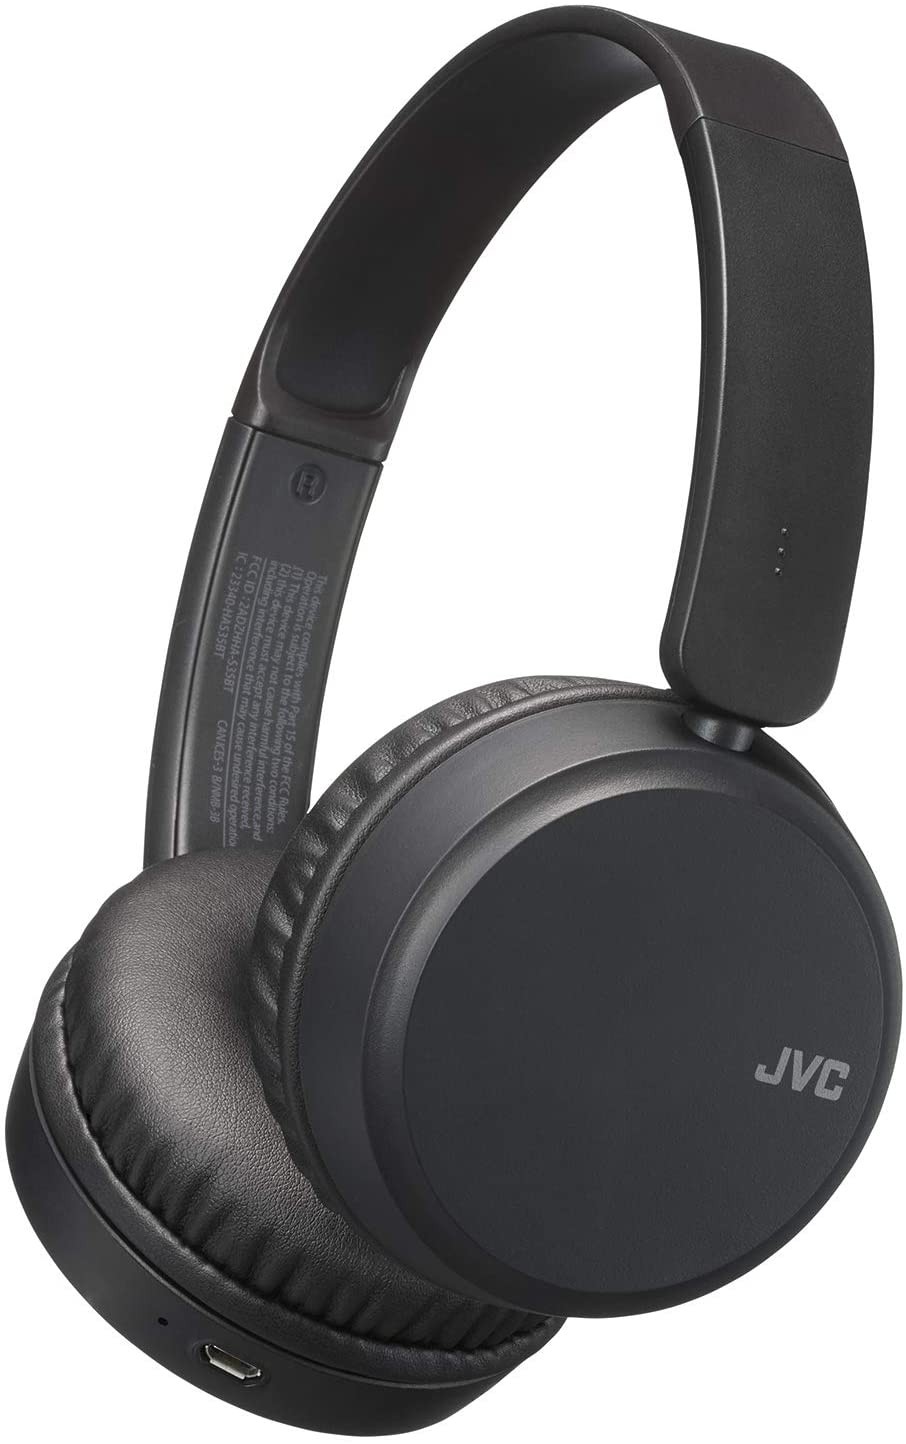 Audifonos JVC Deep Bass Wireless Headphones, Bluetooth 4.1, Boost Function,  Voice Assistant Compatible, 17 Hour Battery Life - HAS35BTB(Black) -  VELLSTORE